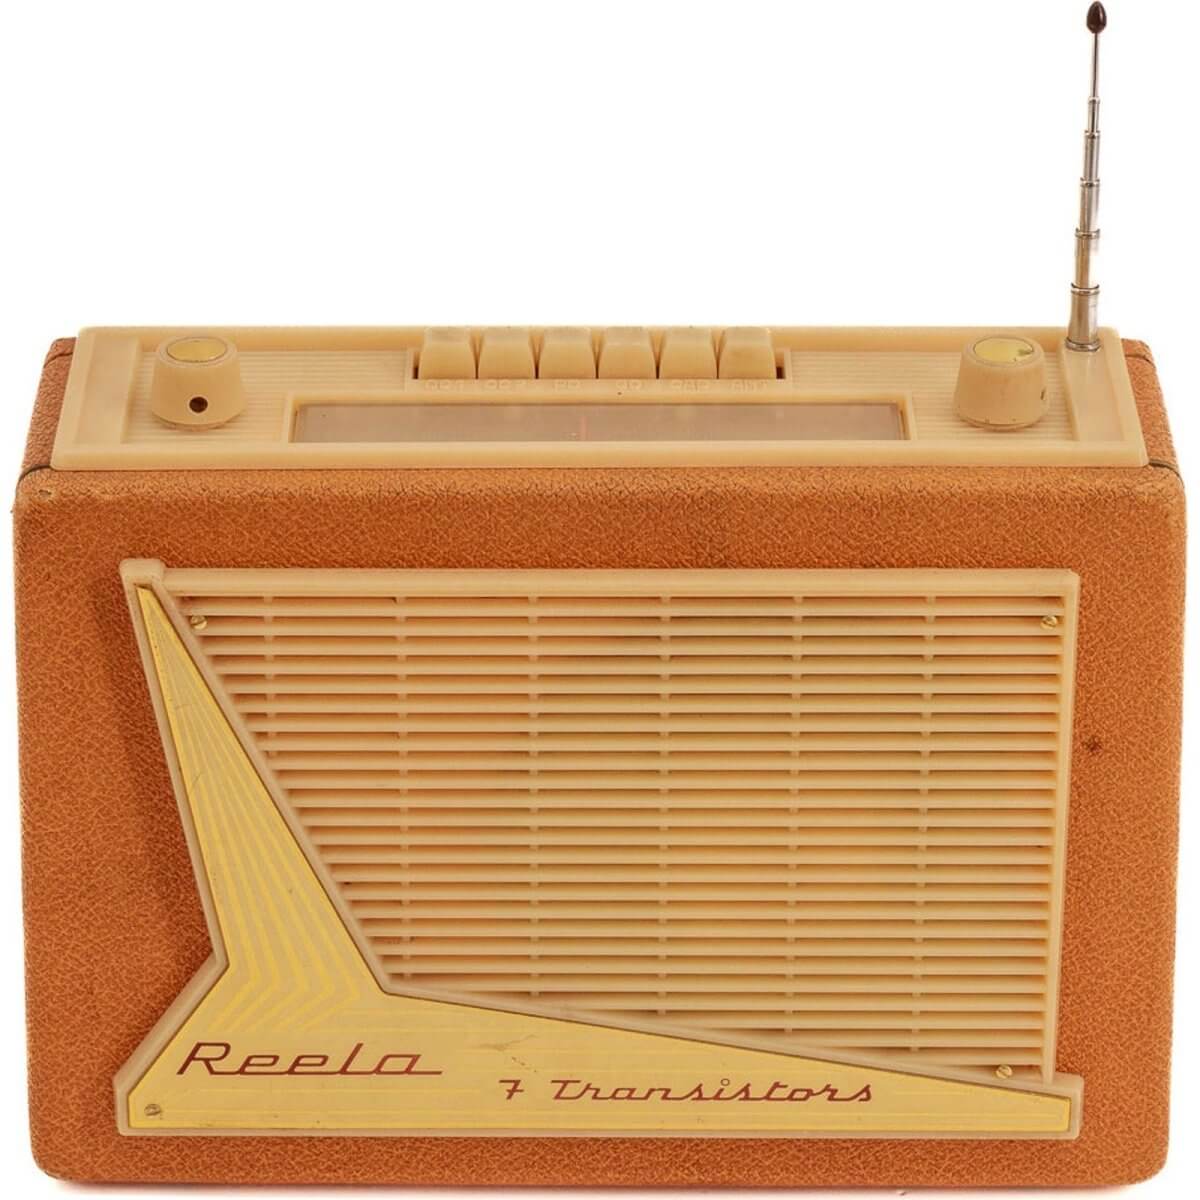 Transistor Bluetooth Reela Vintage 70’S-A.bsolument-enceintes-et-radios-vintage-bluetooth